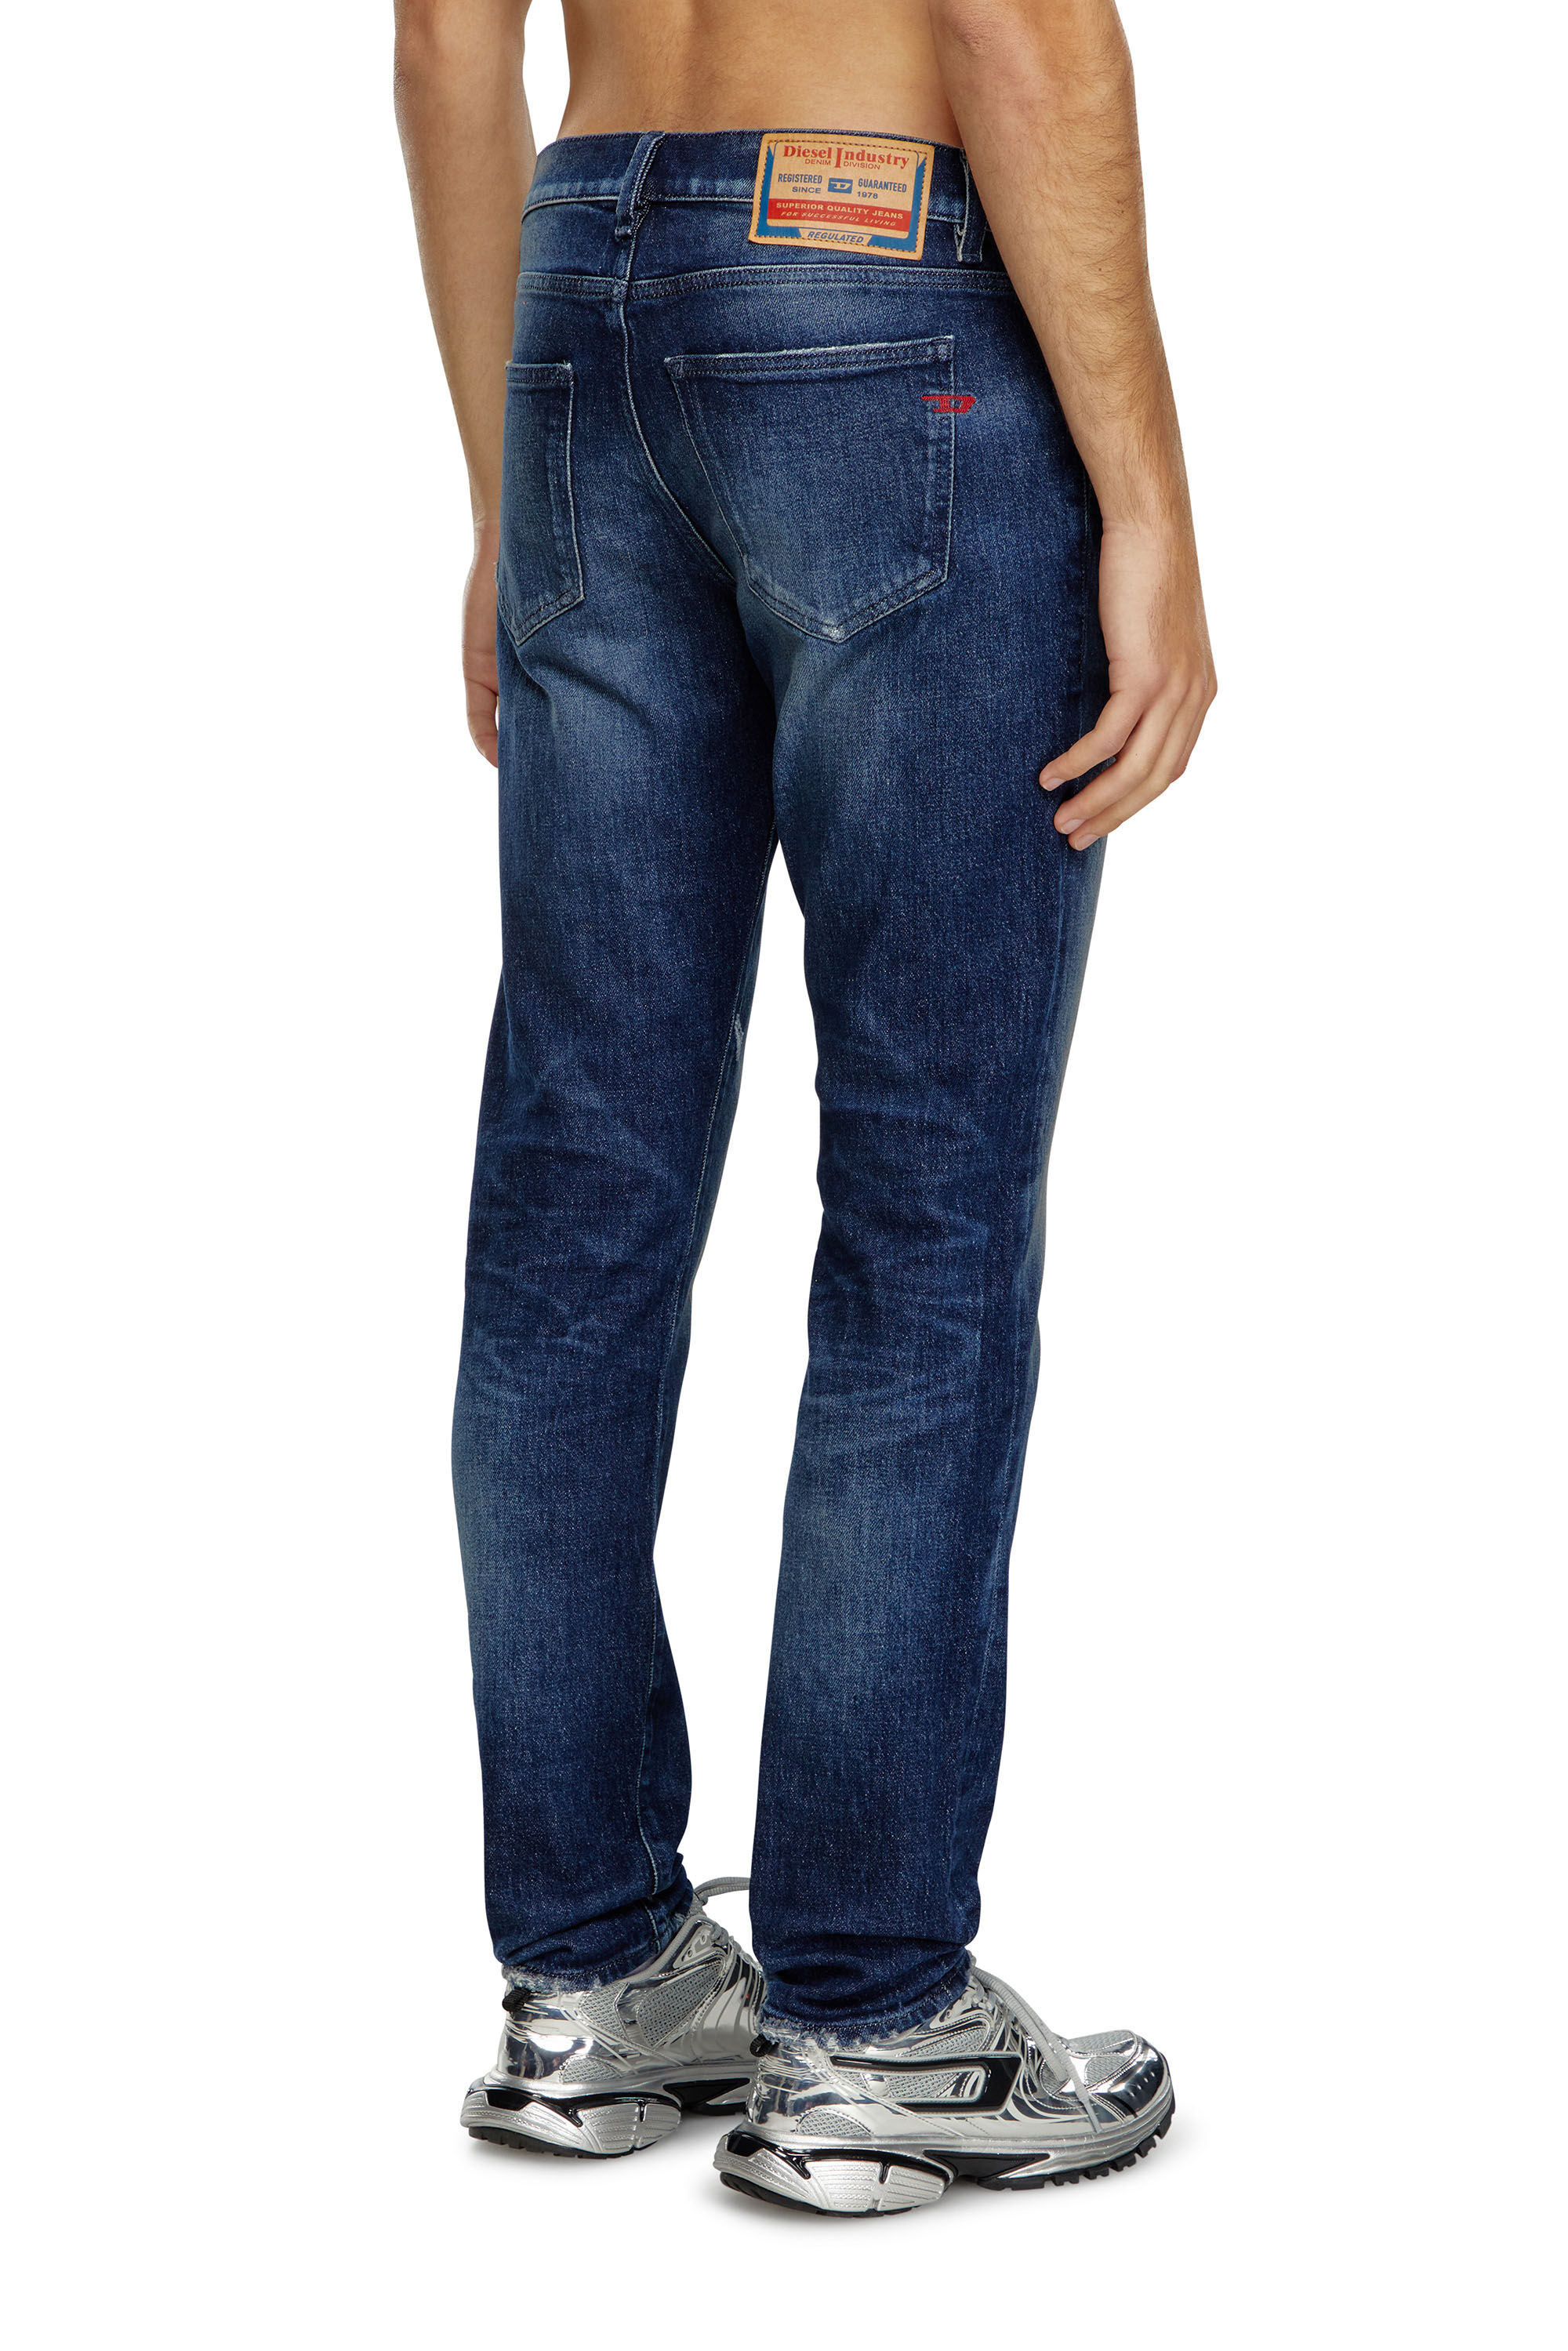 Diesel - Slim Jeans 2019 D-Strukt 09J56, Hombre Slim Jeans - 2019 D-Strukt in Azul marino - Image 4